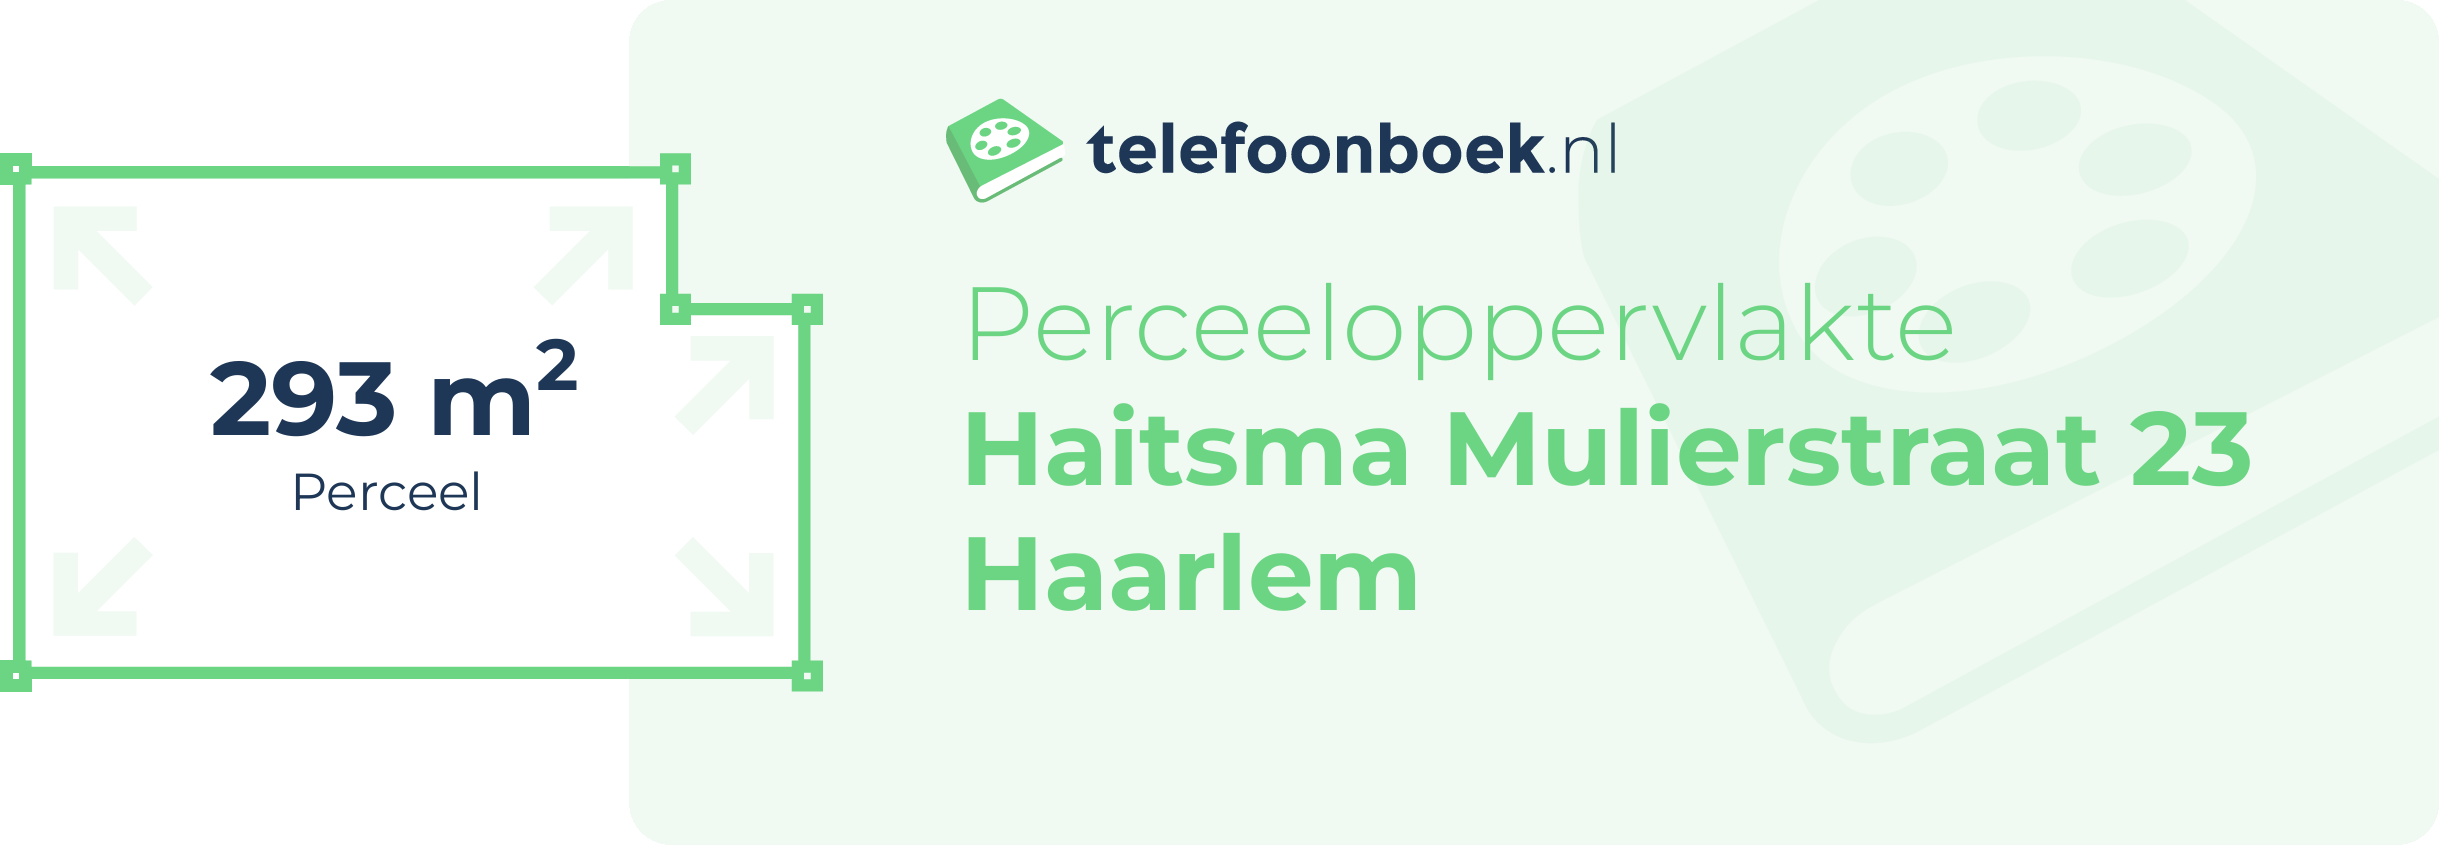 Perceeloppervlakte Haitsma Mulierstraat 23 Haarlem